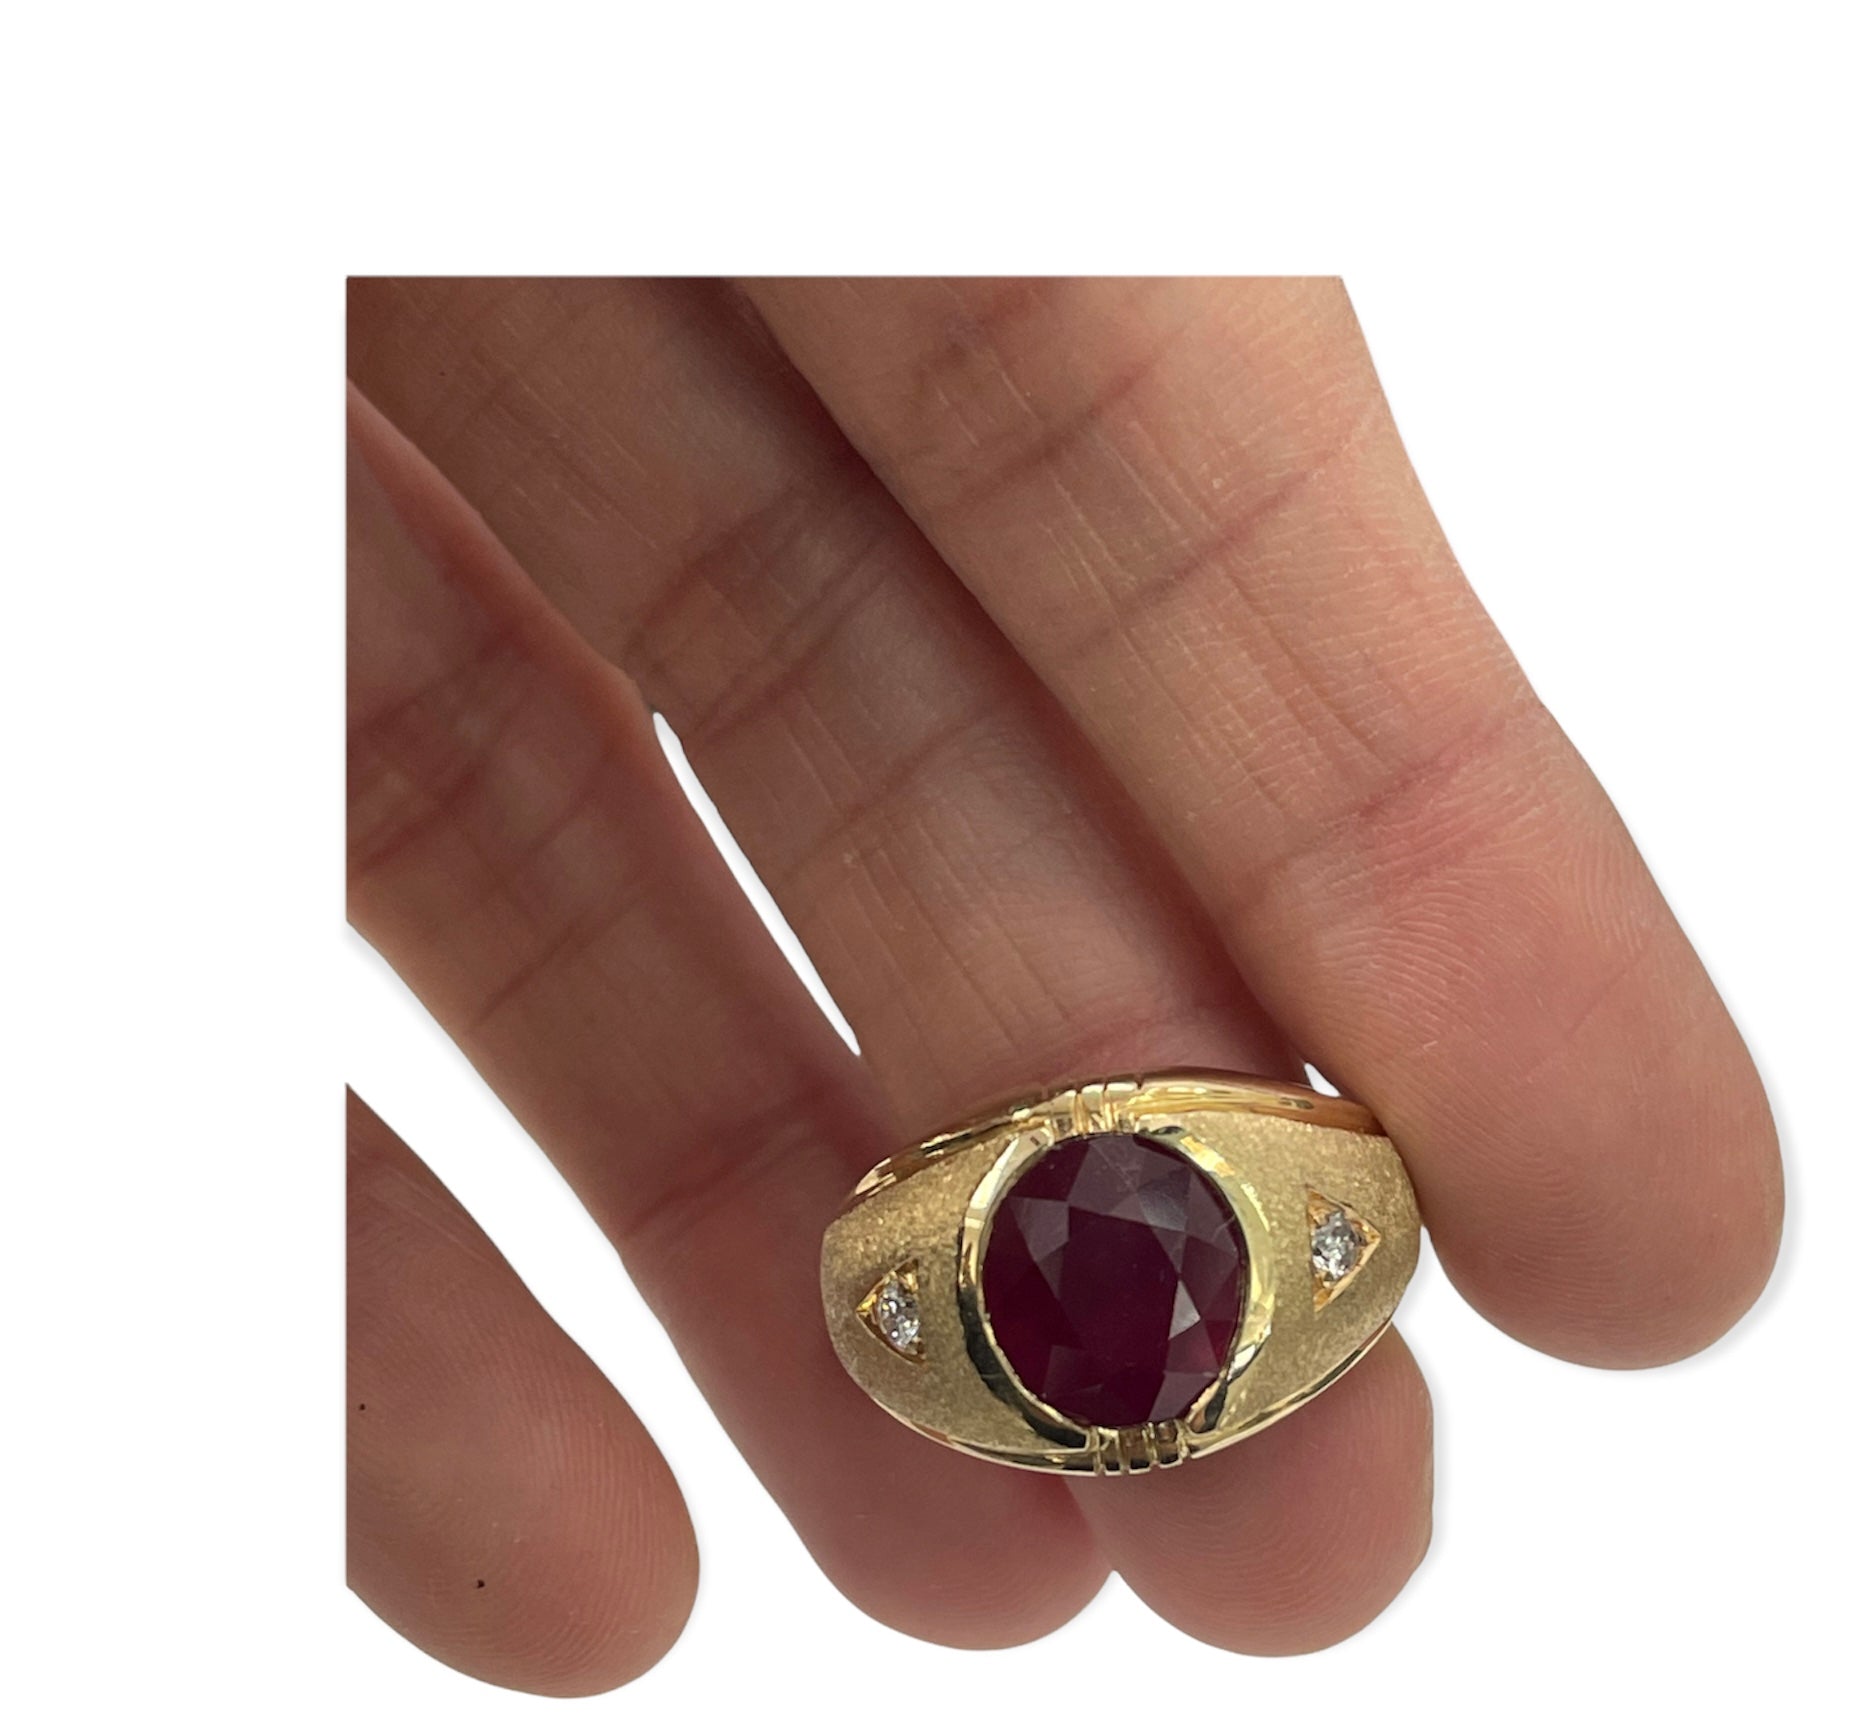 4.65 Carats Ruby Oval Gem Diamond Ring Yellow Gold 14kt Unisex